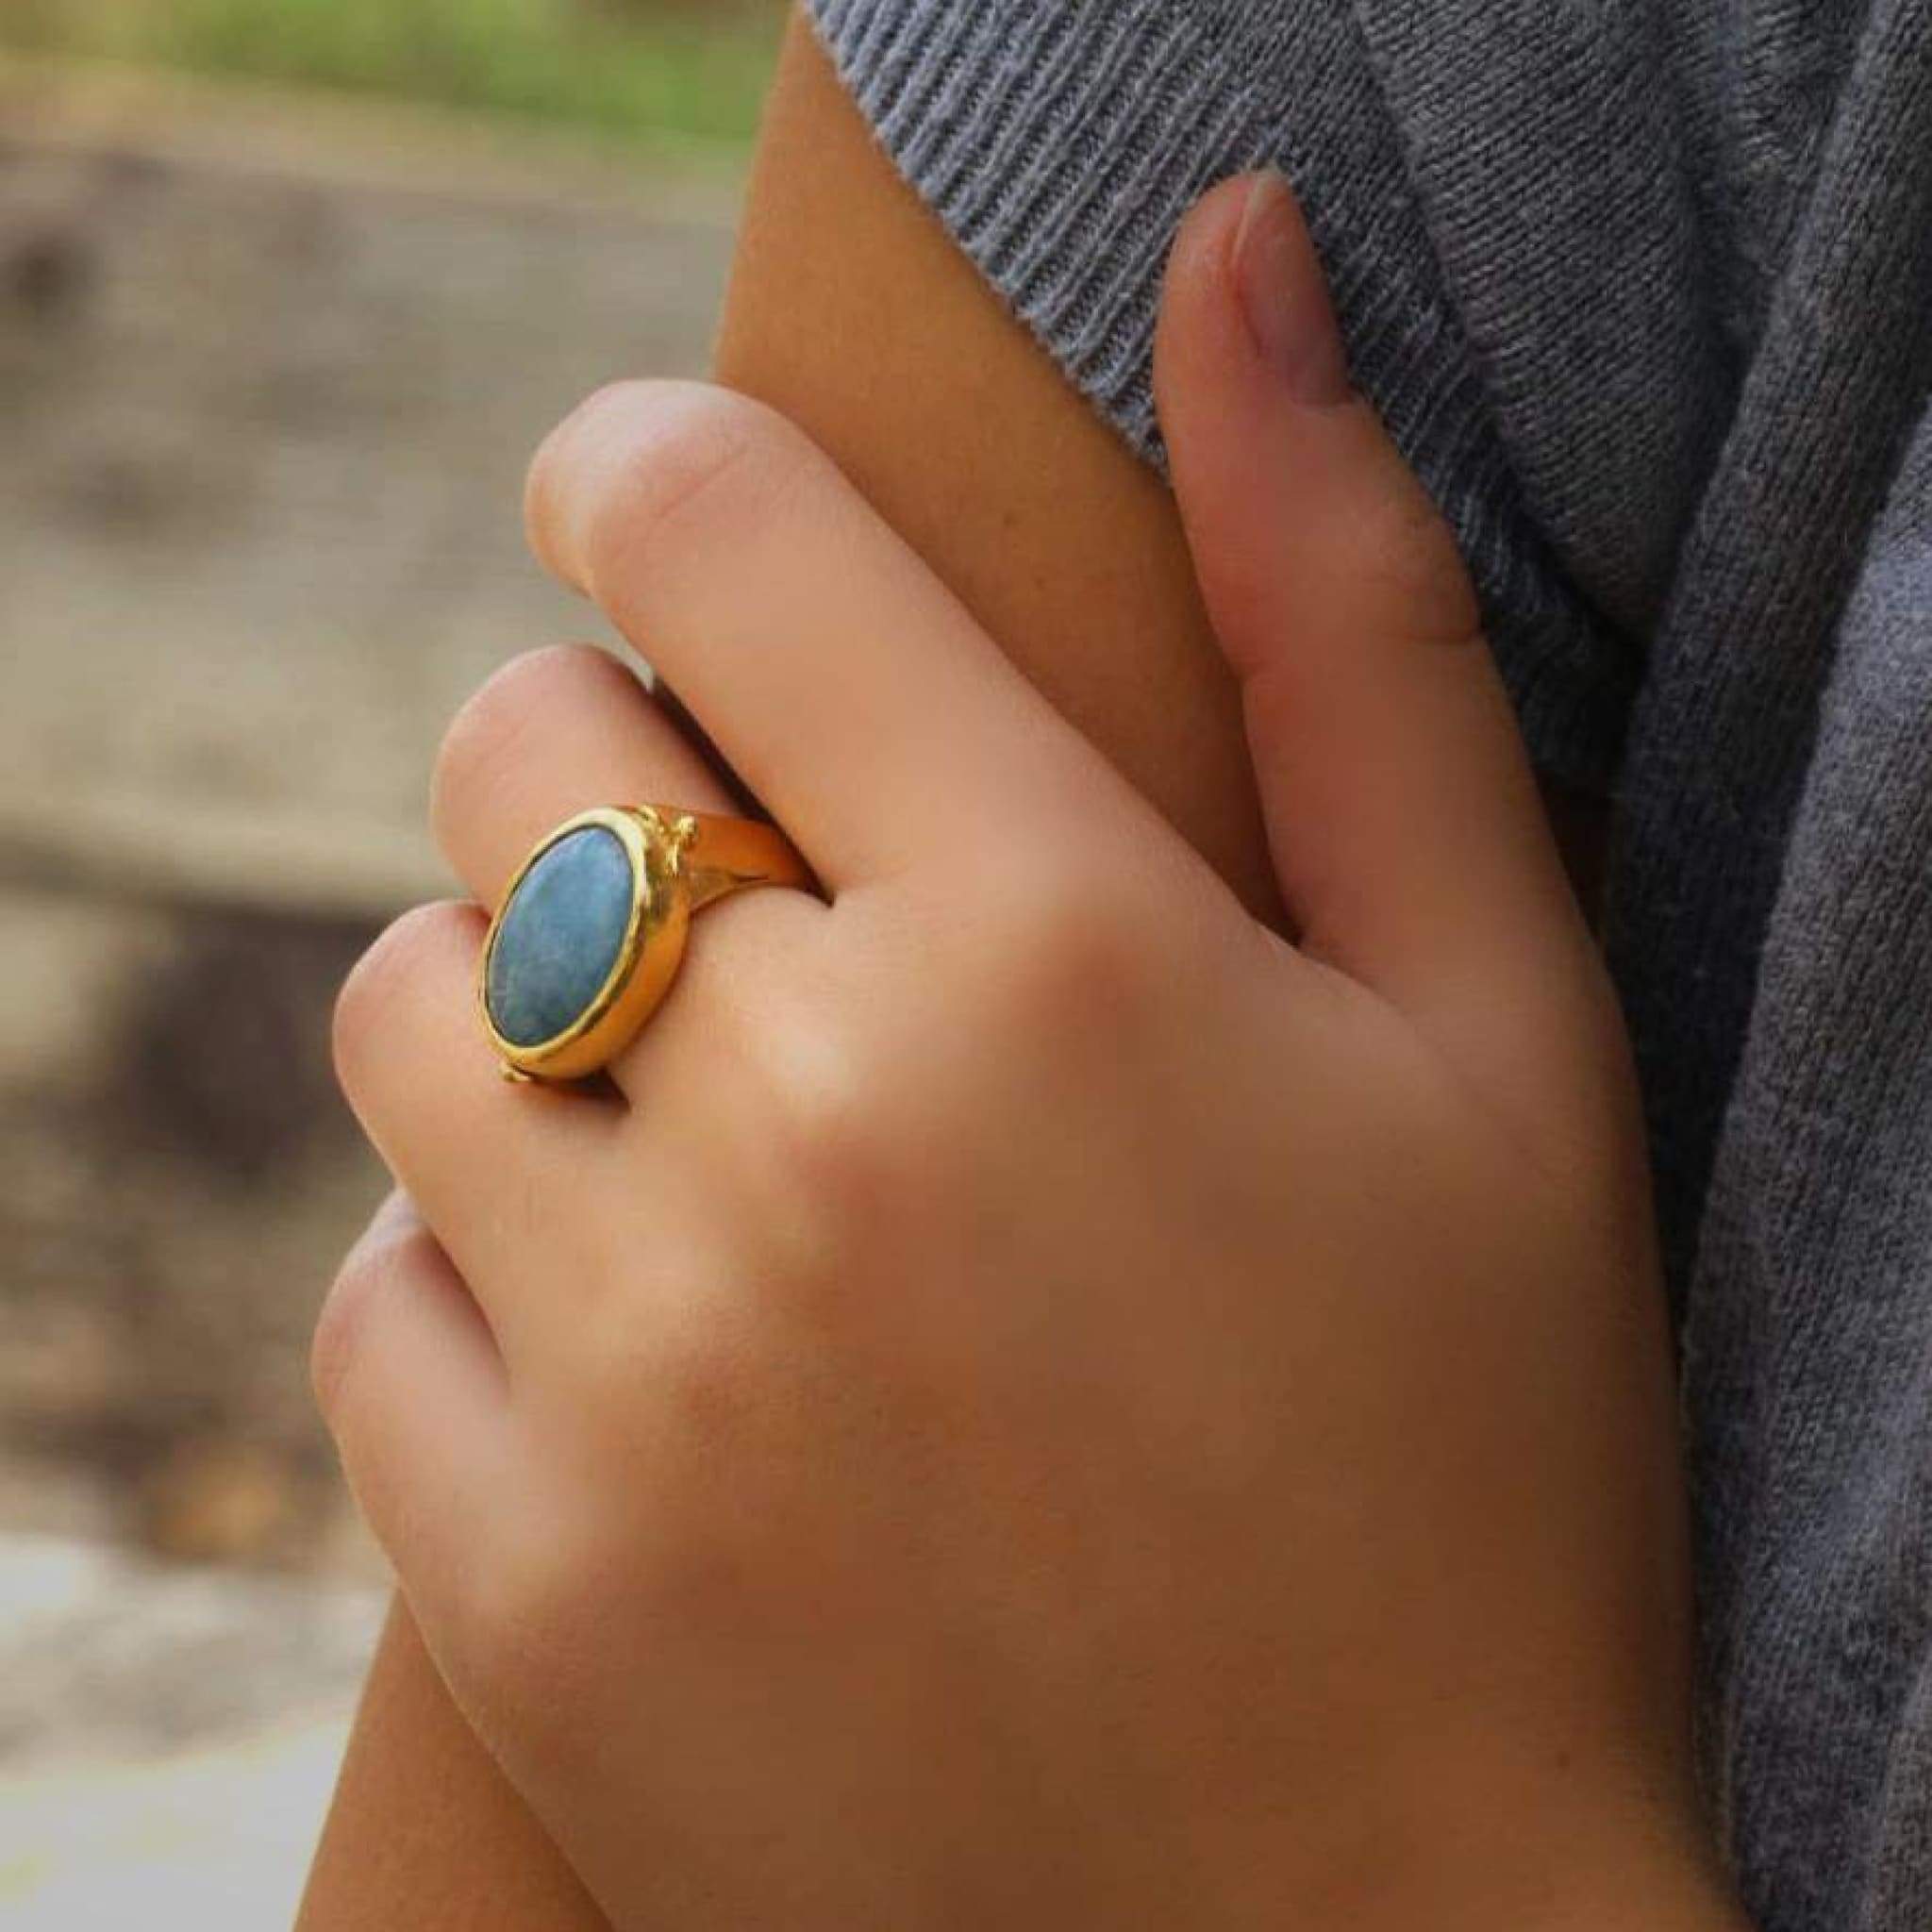 14K Gold Filled Ring With Aquamarine Gemstone Rings